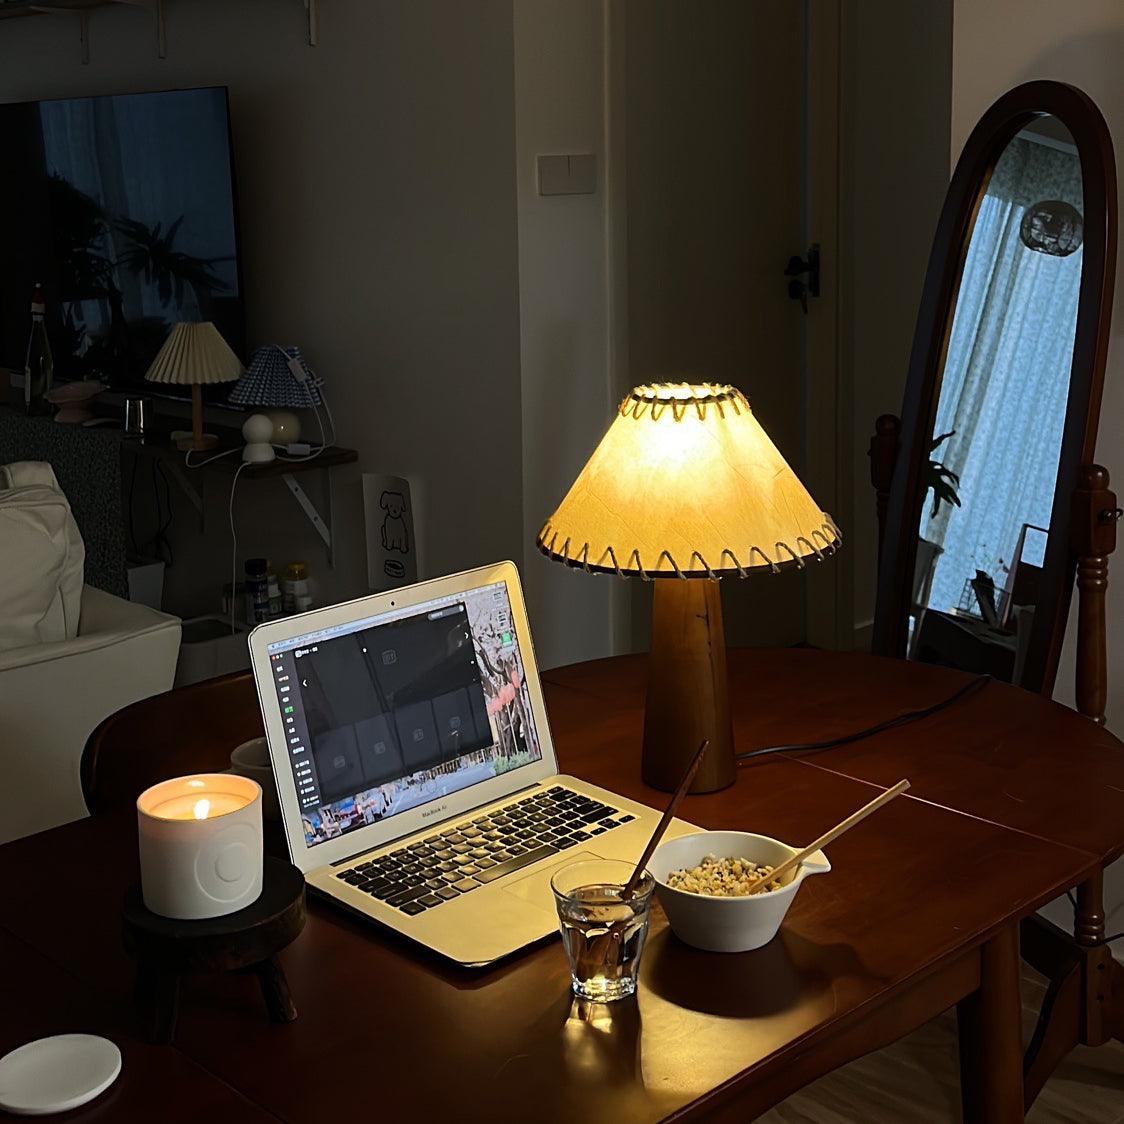 Kibo Wood Table Lamp 15.7″ - Docos